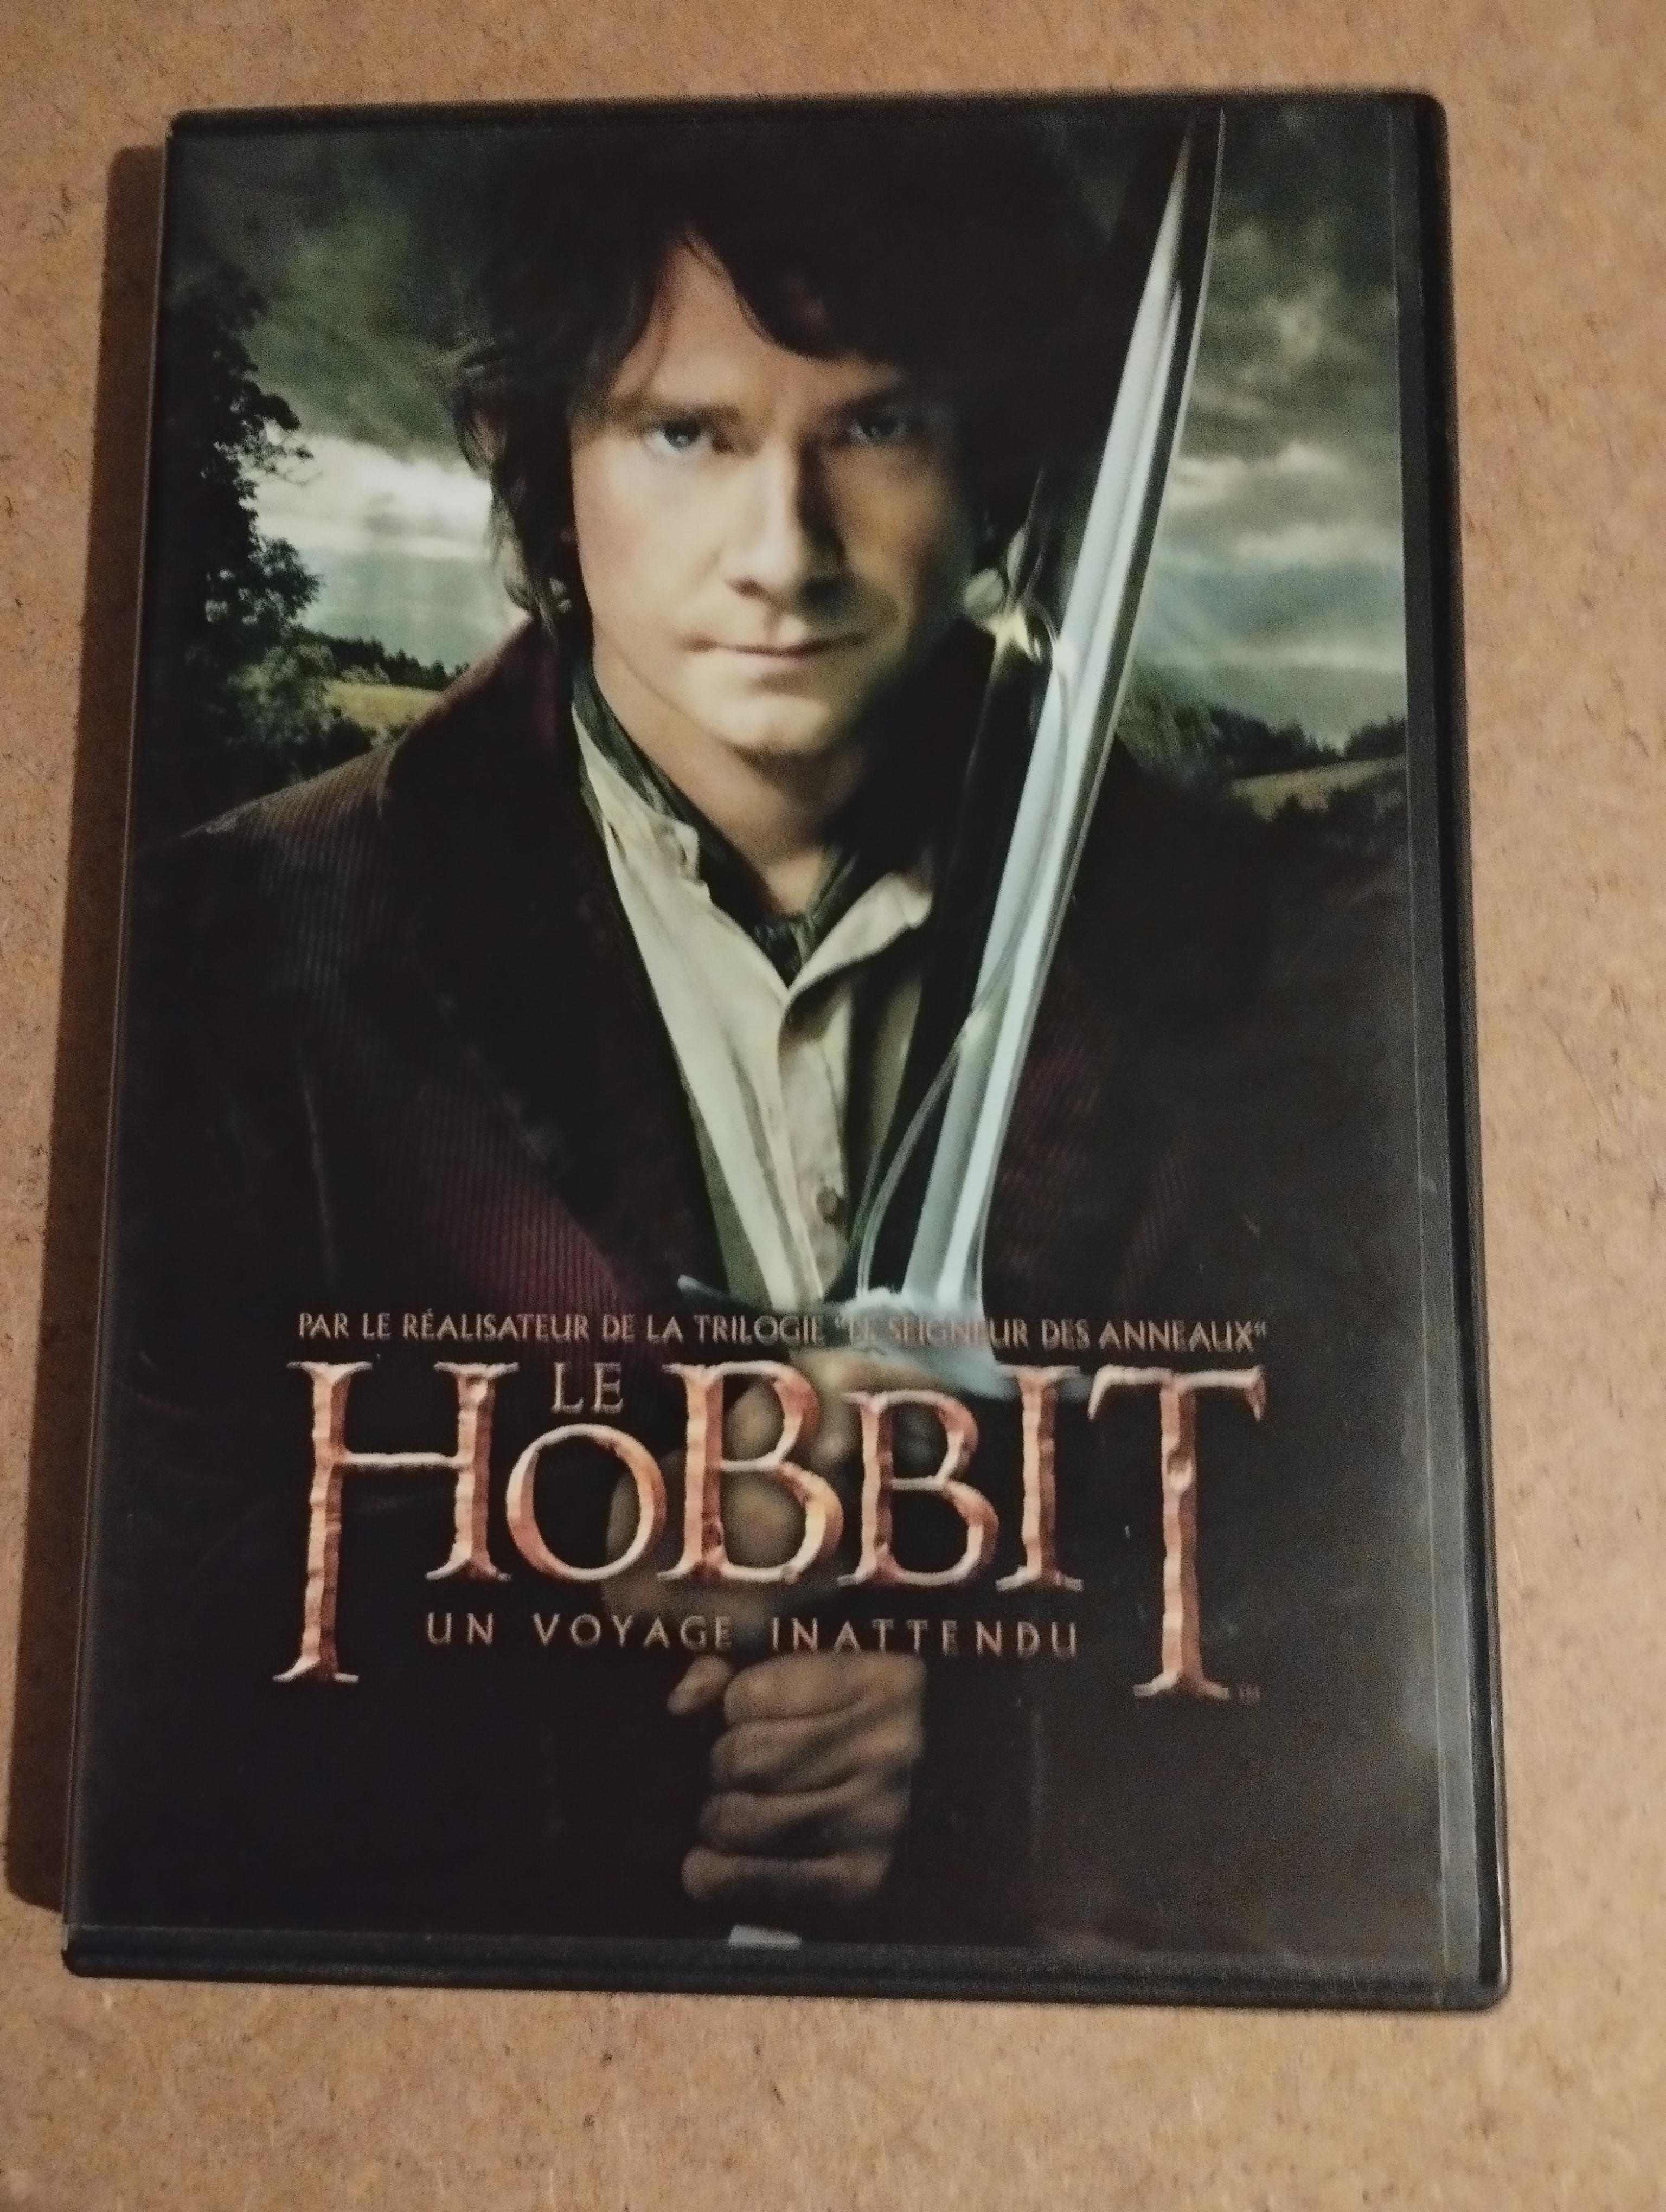 troc de troc dvd hobbit - un voyage inattendu image 0